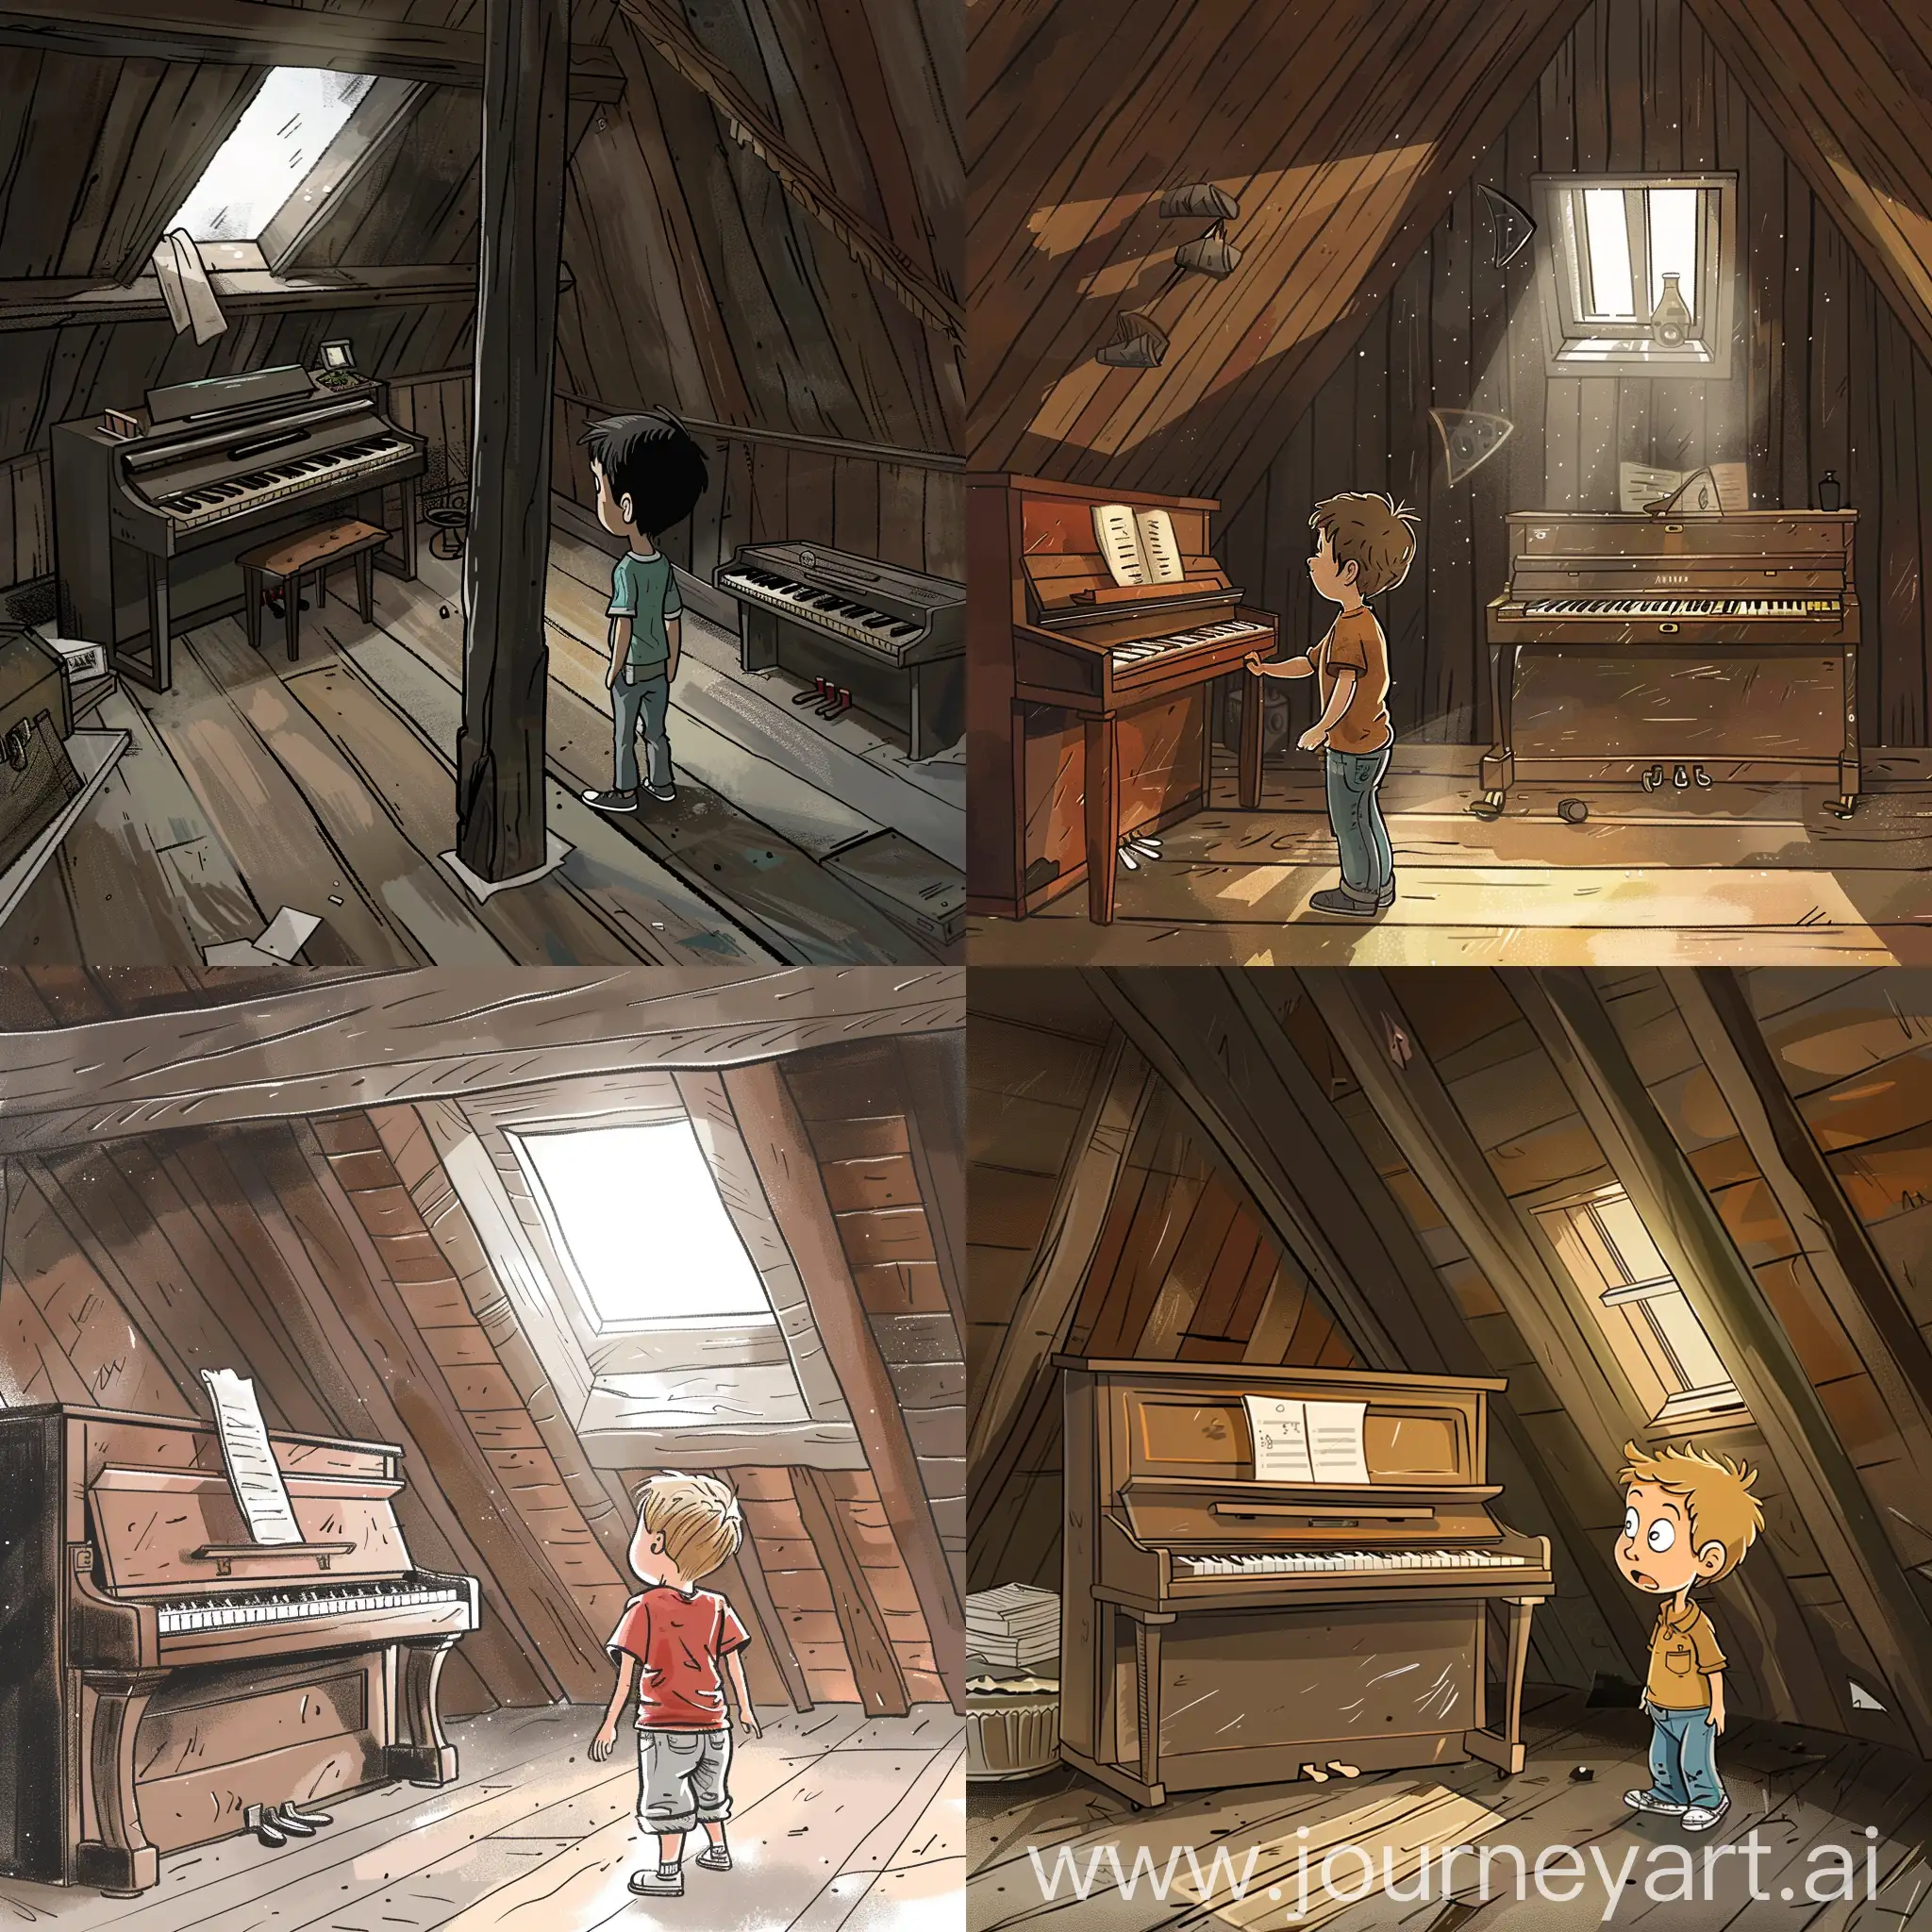 Curious-Boy-in-Cartoon-Attic-Observing-a-Piano